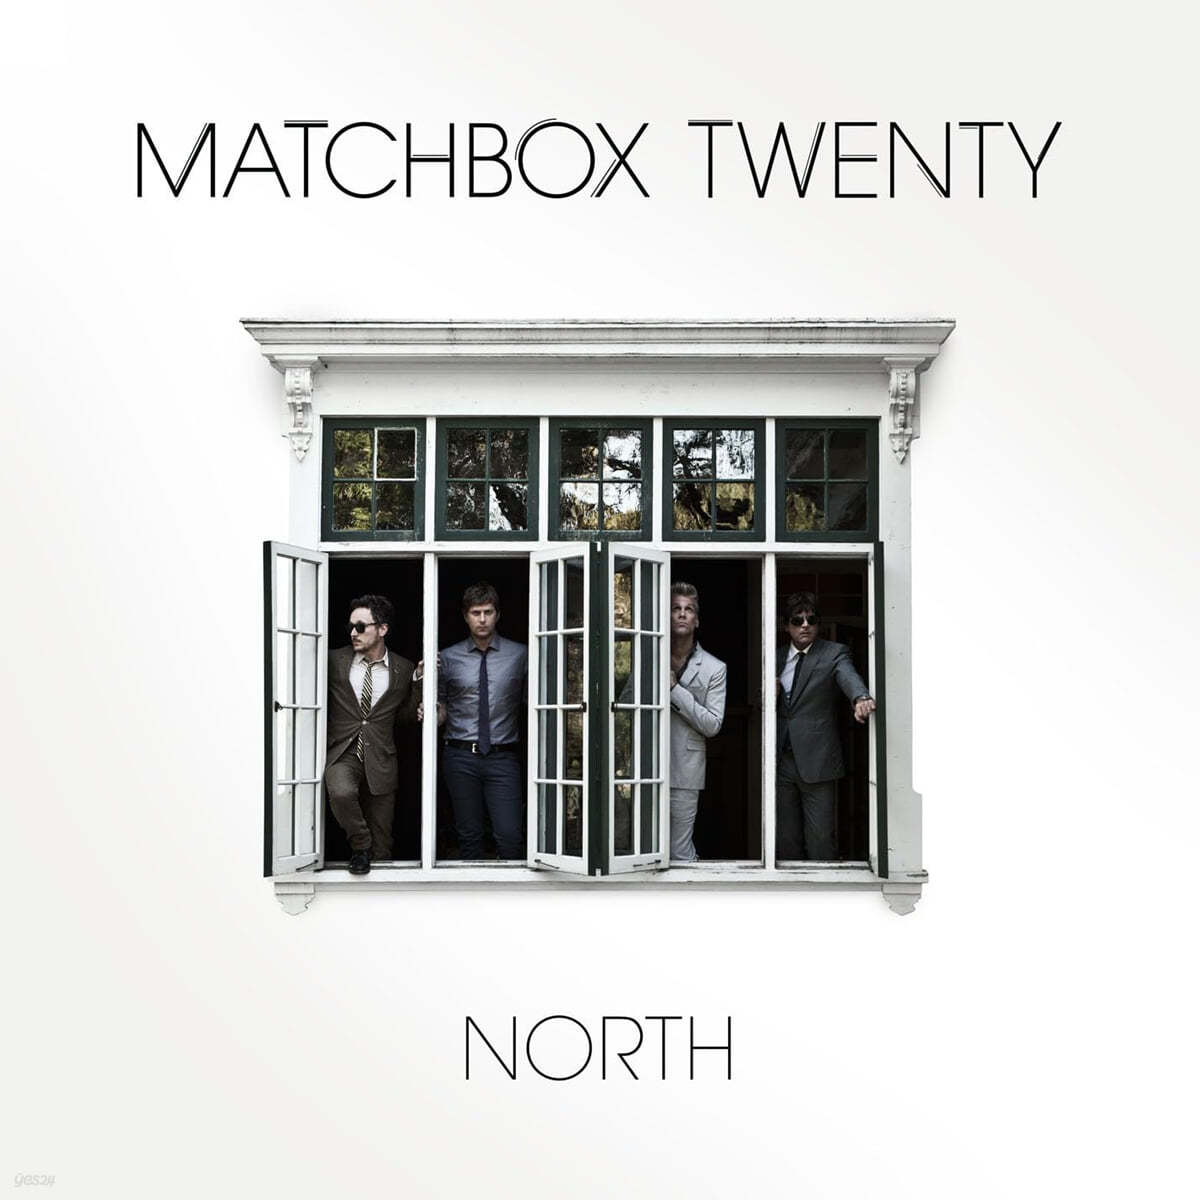 Matchbox Twenty (매치박스 트웬티) - North [LP]